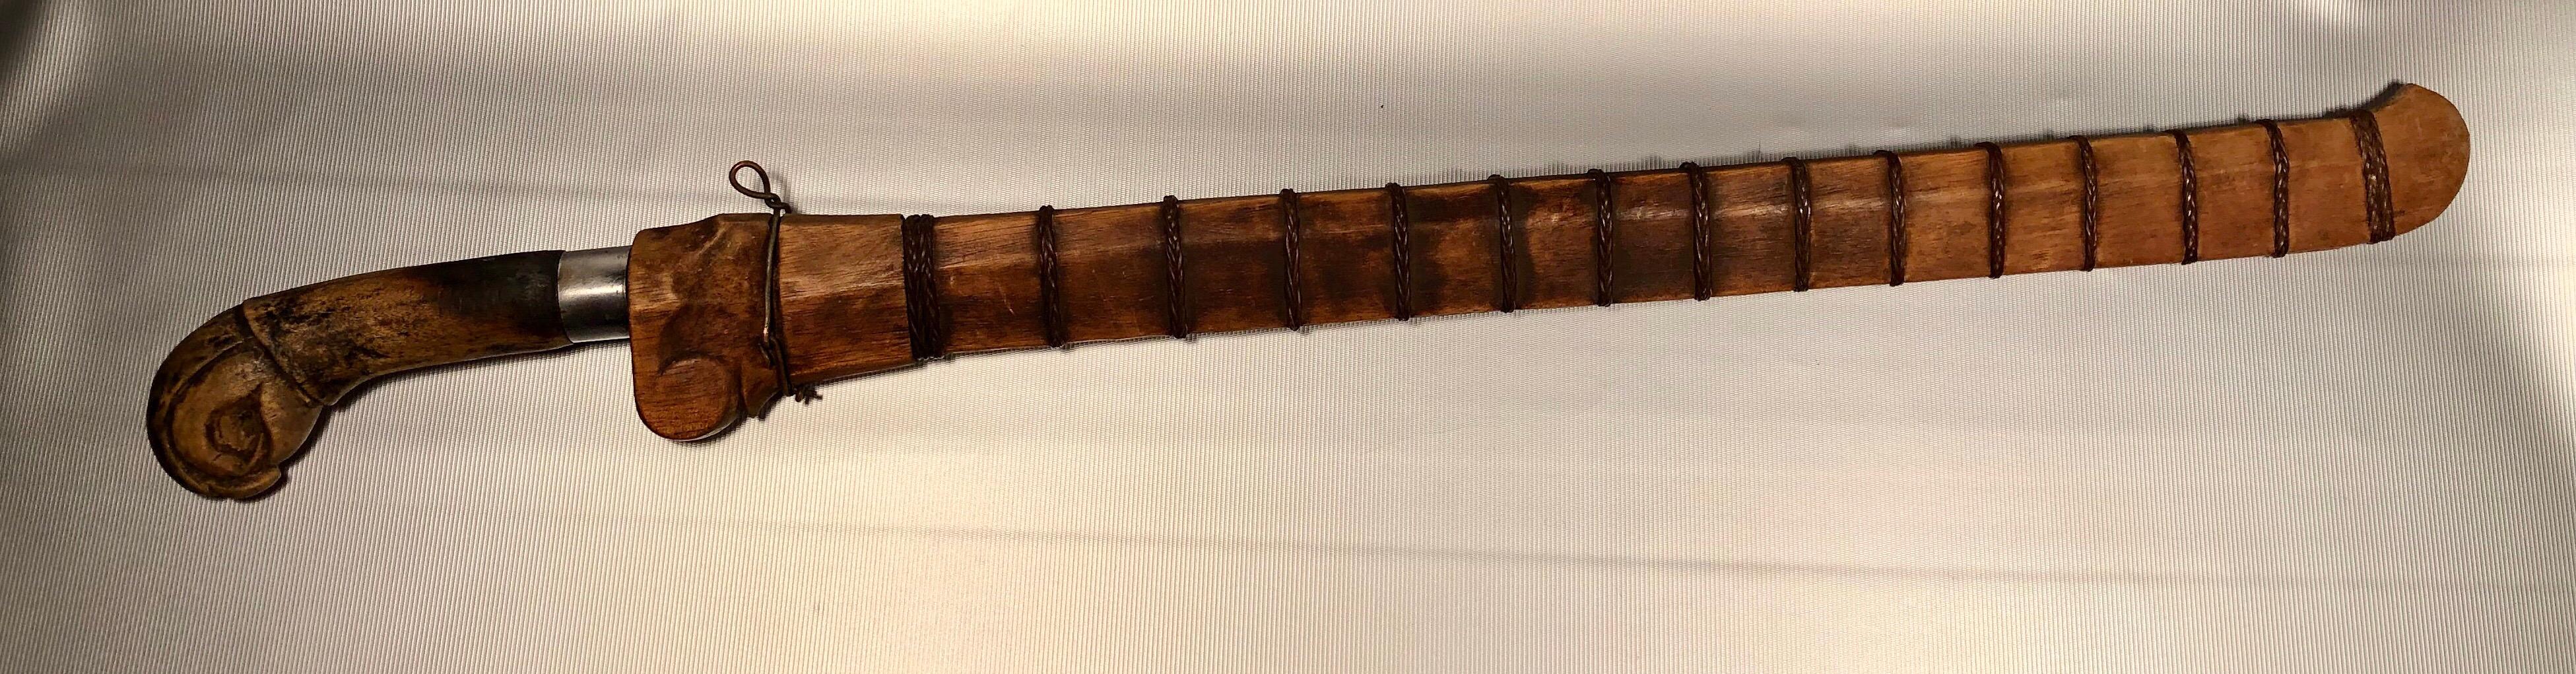 Arts and Crafts Antique Asian Sword Rifle Samurai Weapon, China, circa 1800